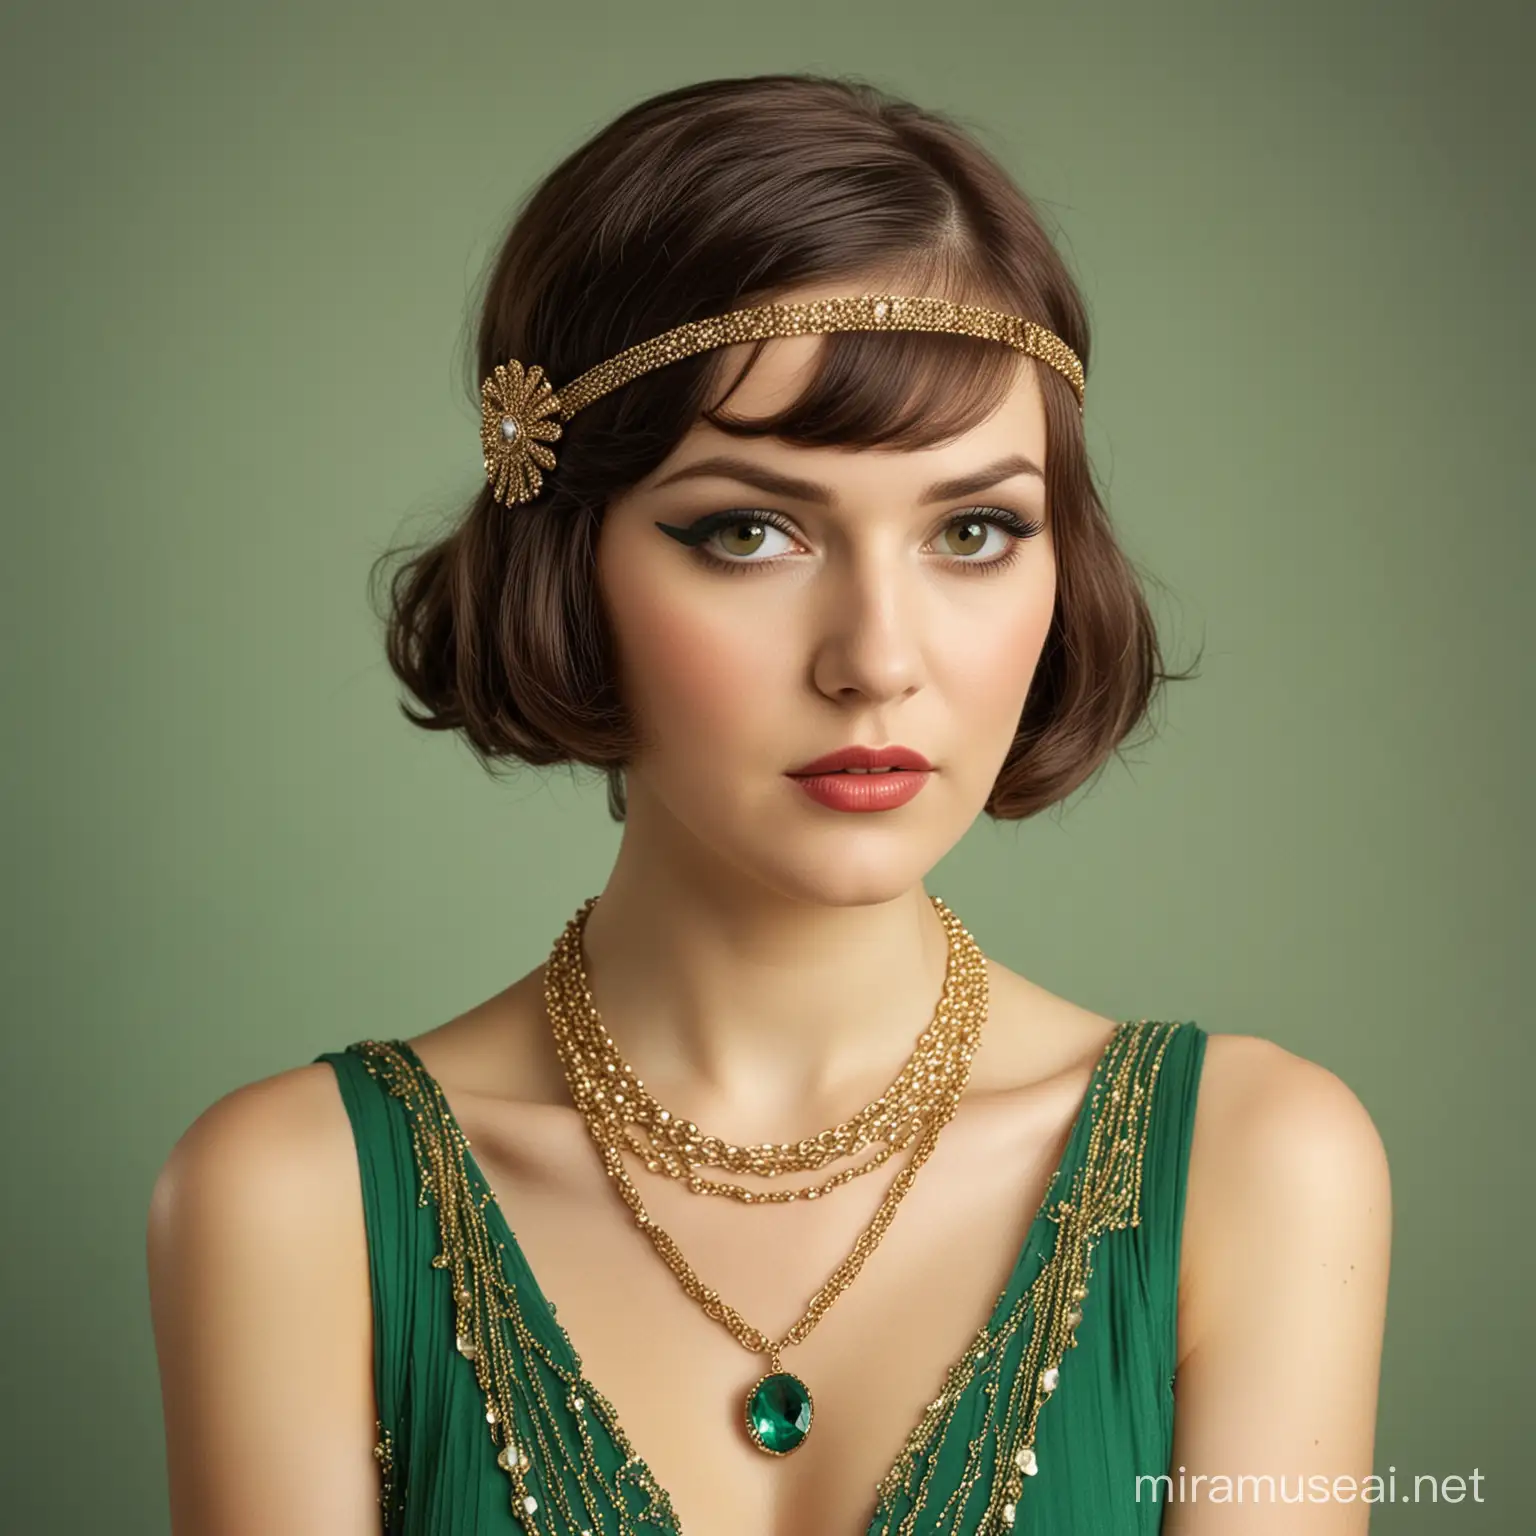 Elegant Art Deco Flapper Woman in Green Dress and Gold Jewelry